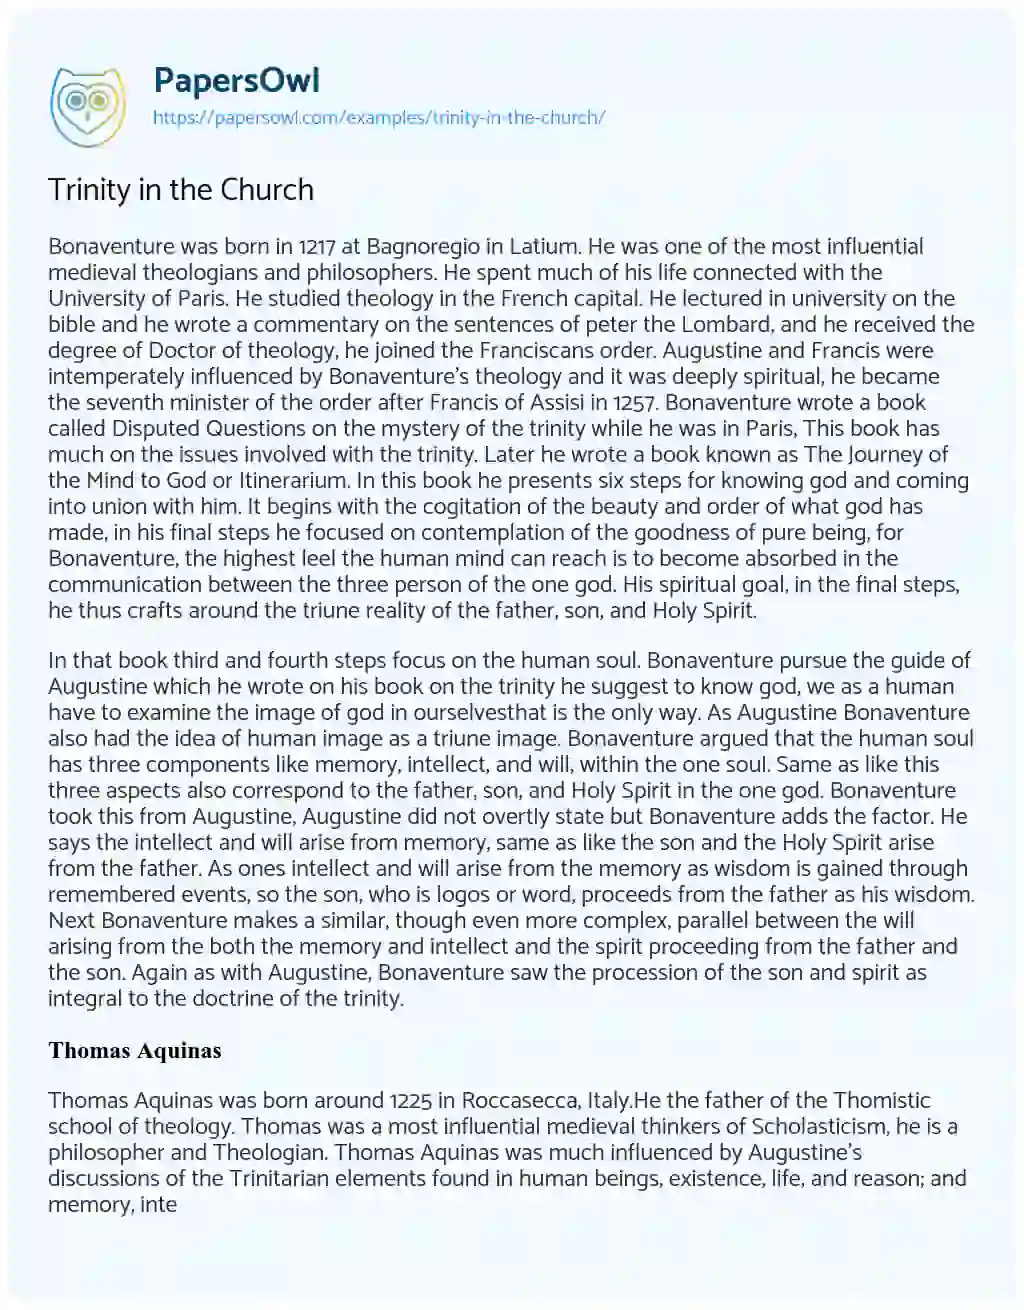 Essay on Trinity in the Church